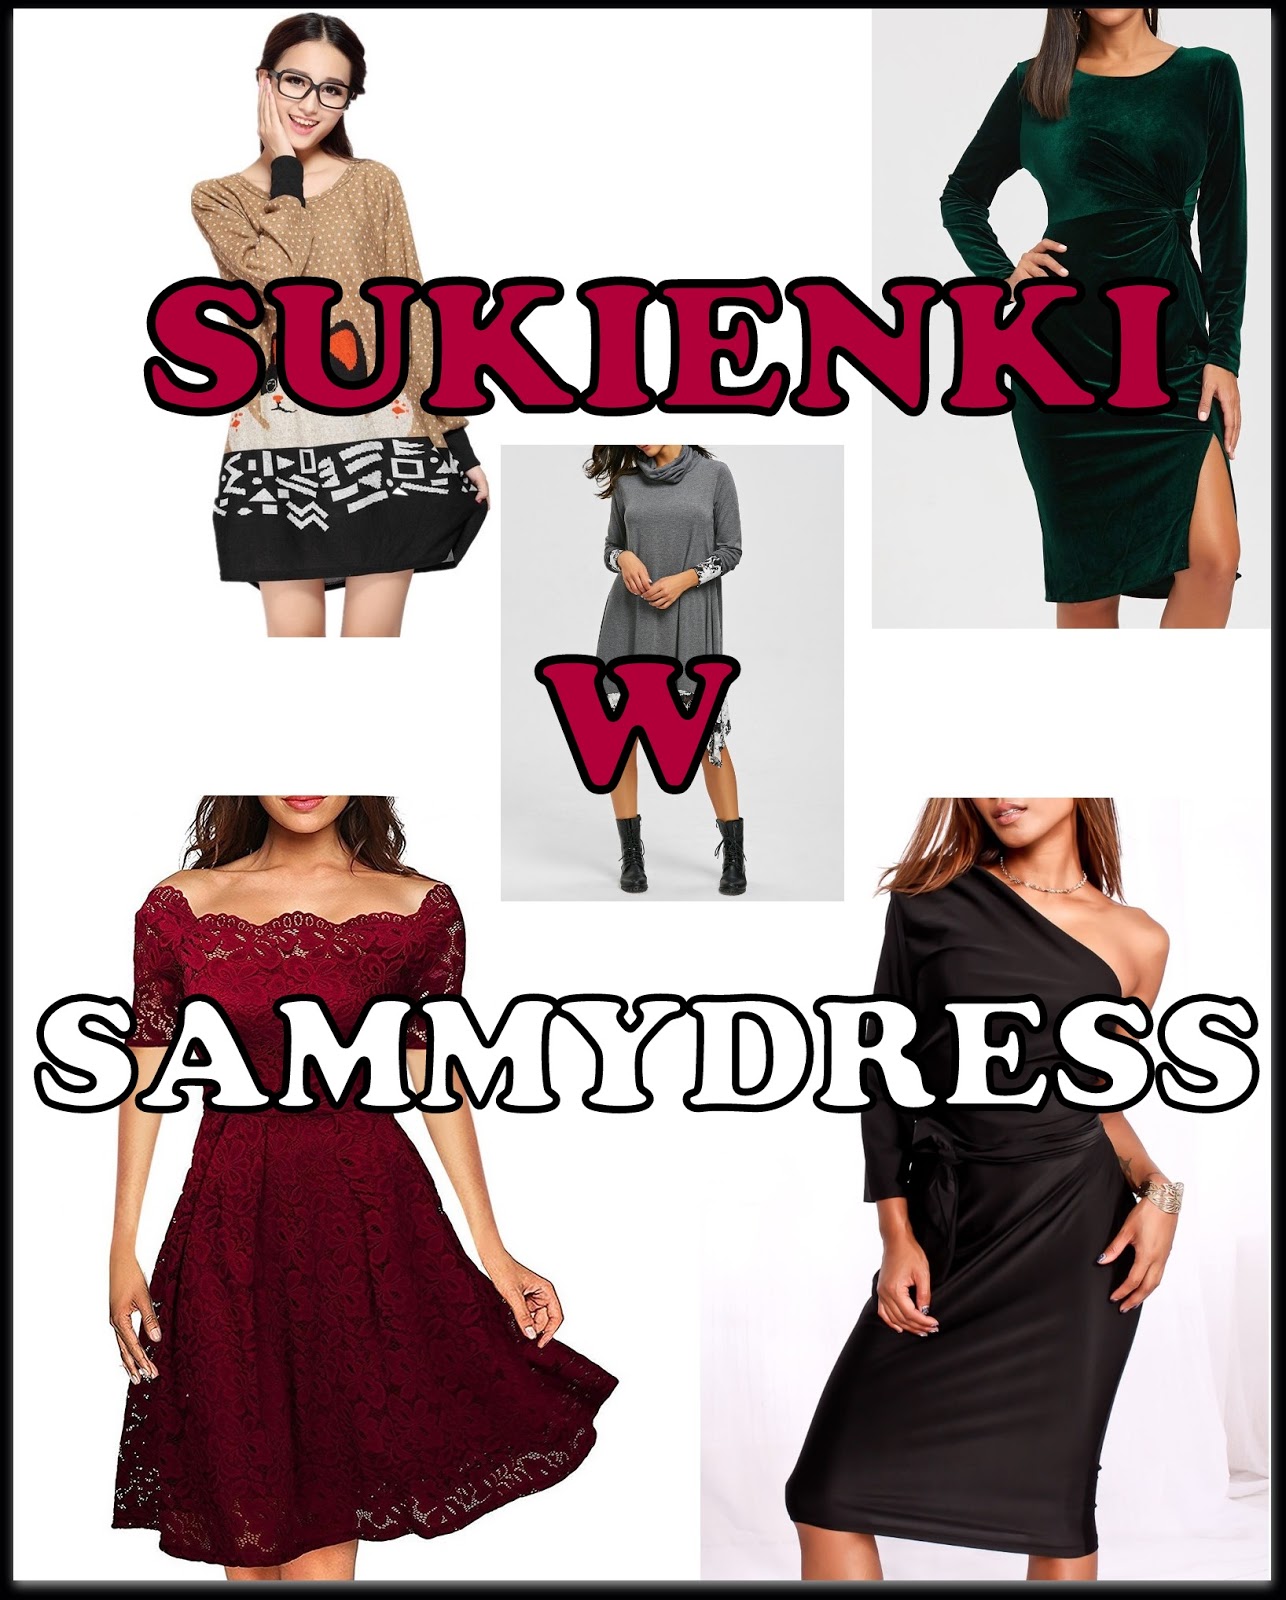 Blog testerski: SAMMYDRESS - PrzeglÄd najmodniejszych sukienek!